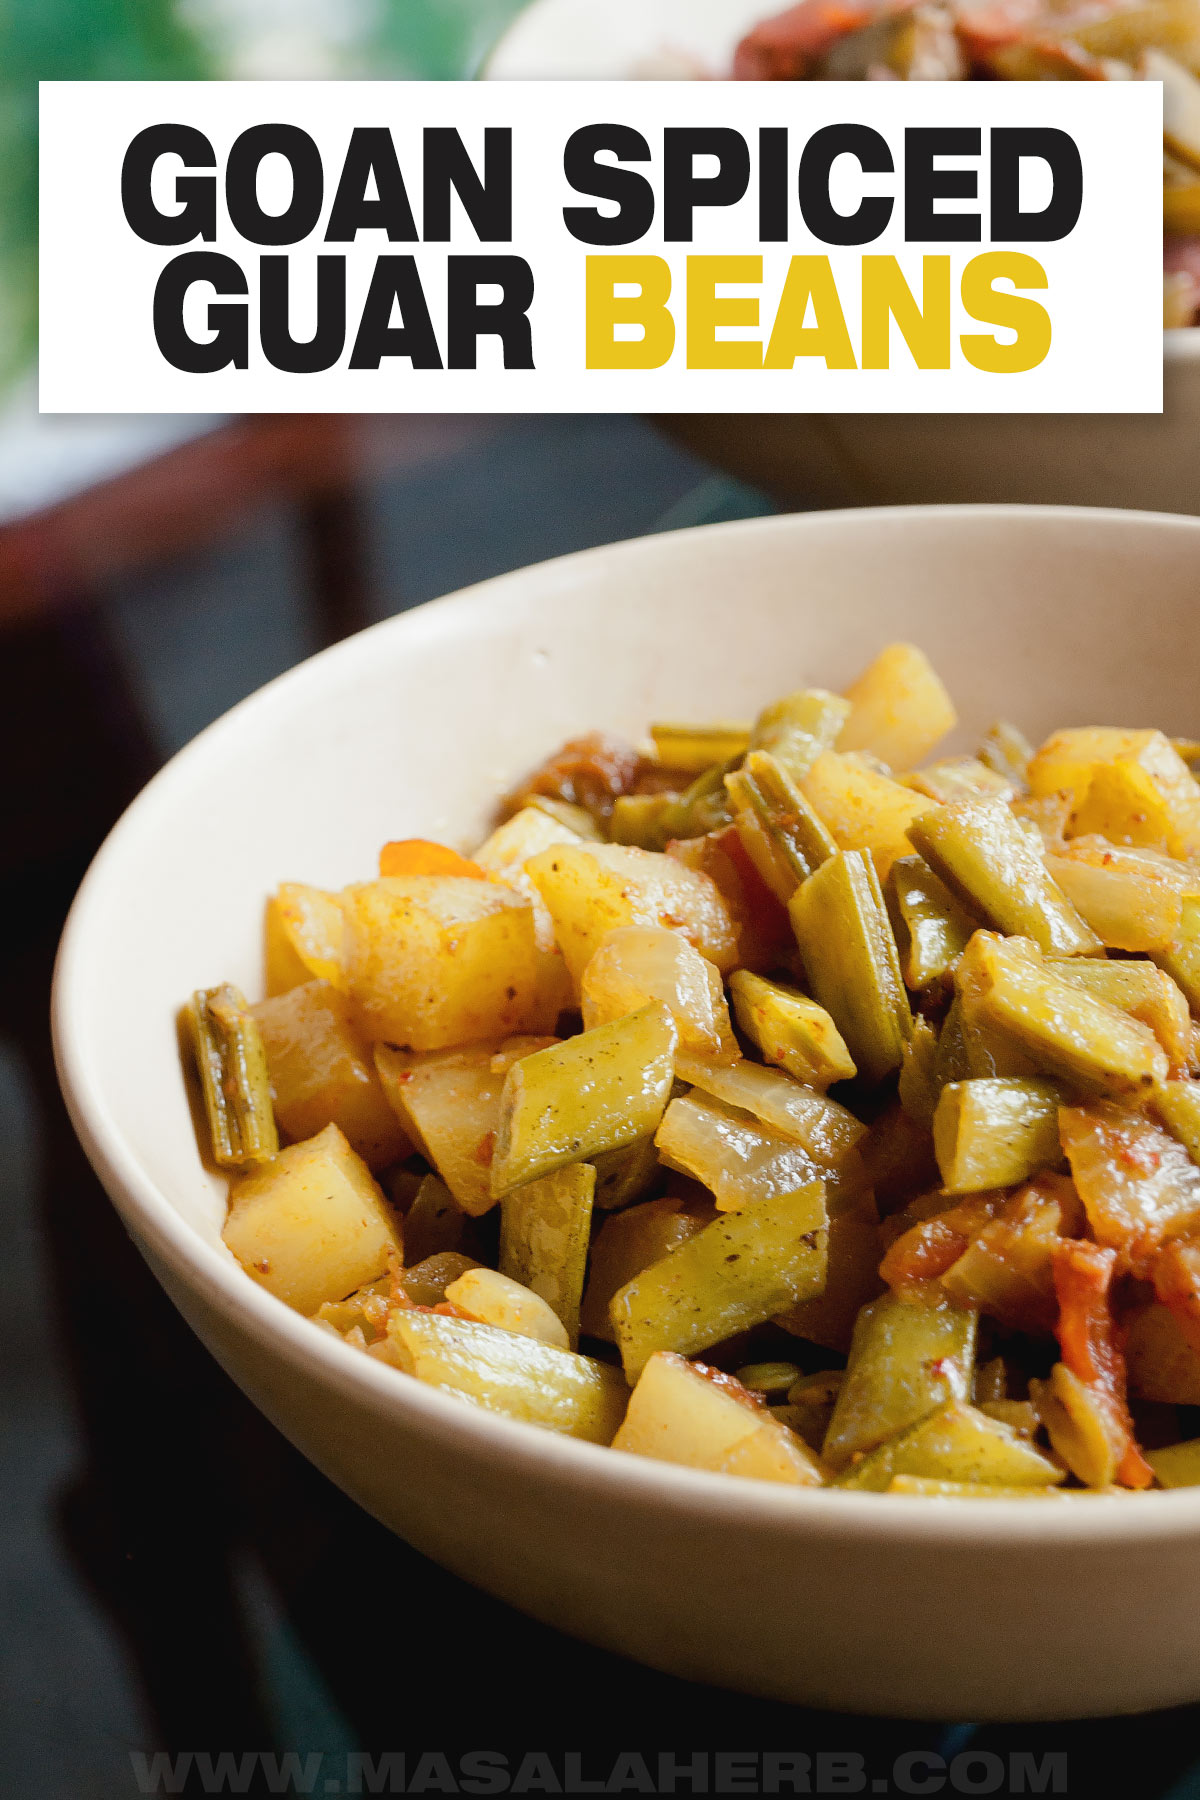 Goan Guar Beans Recipe cover image